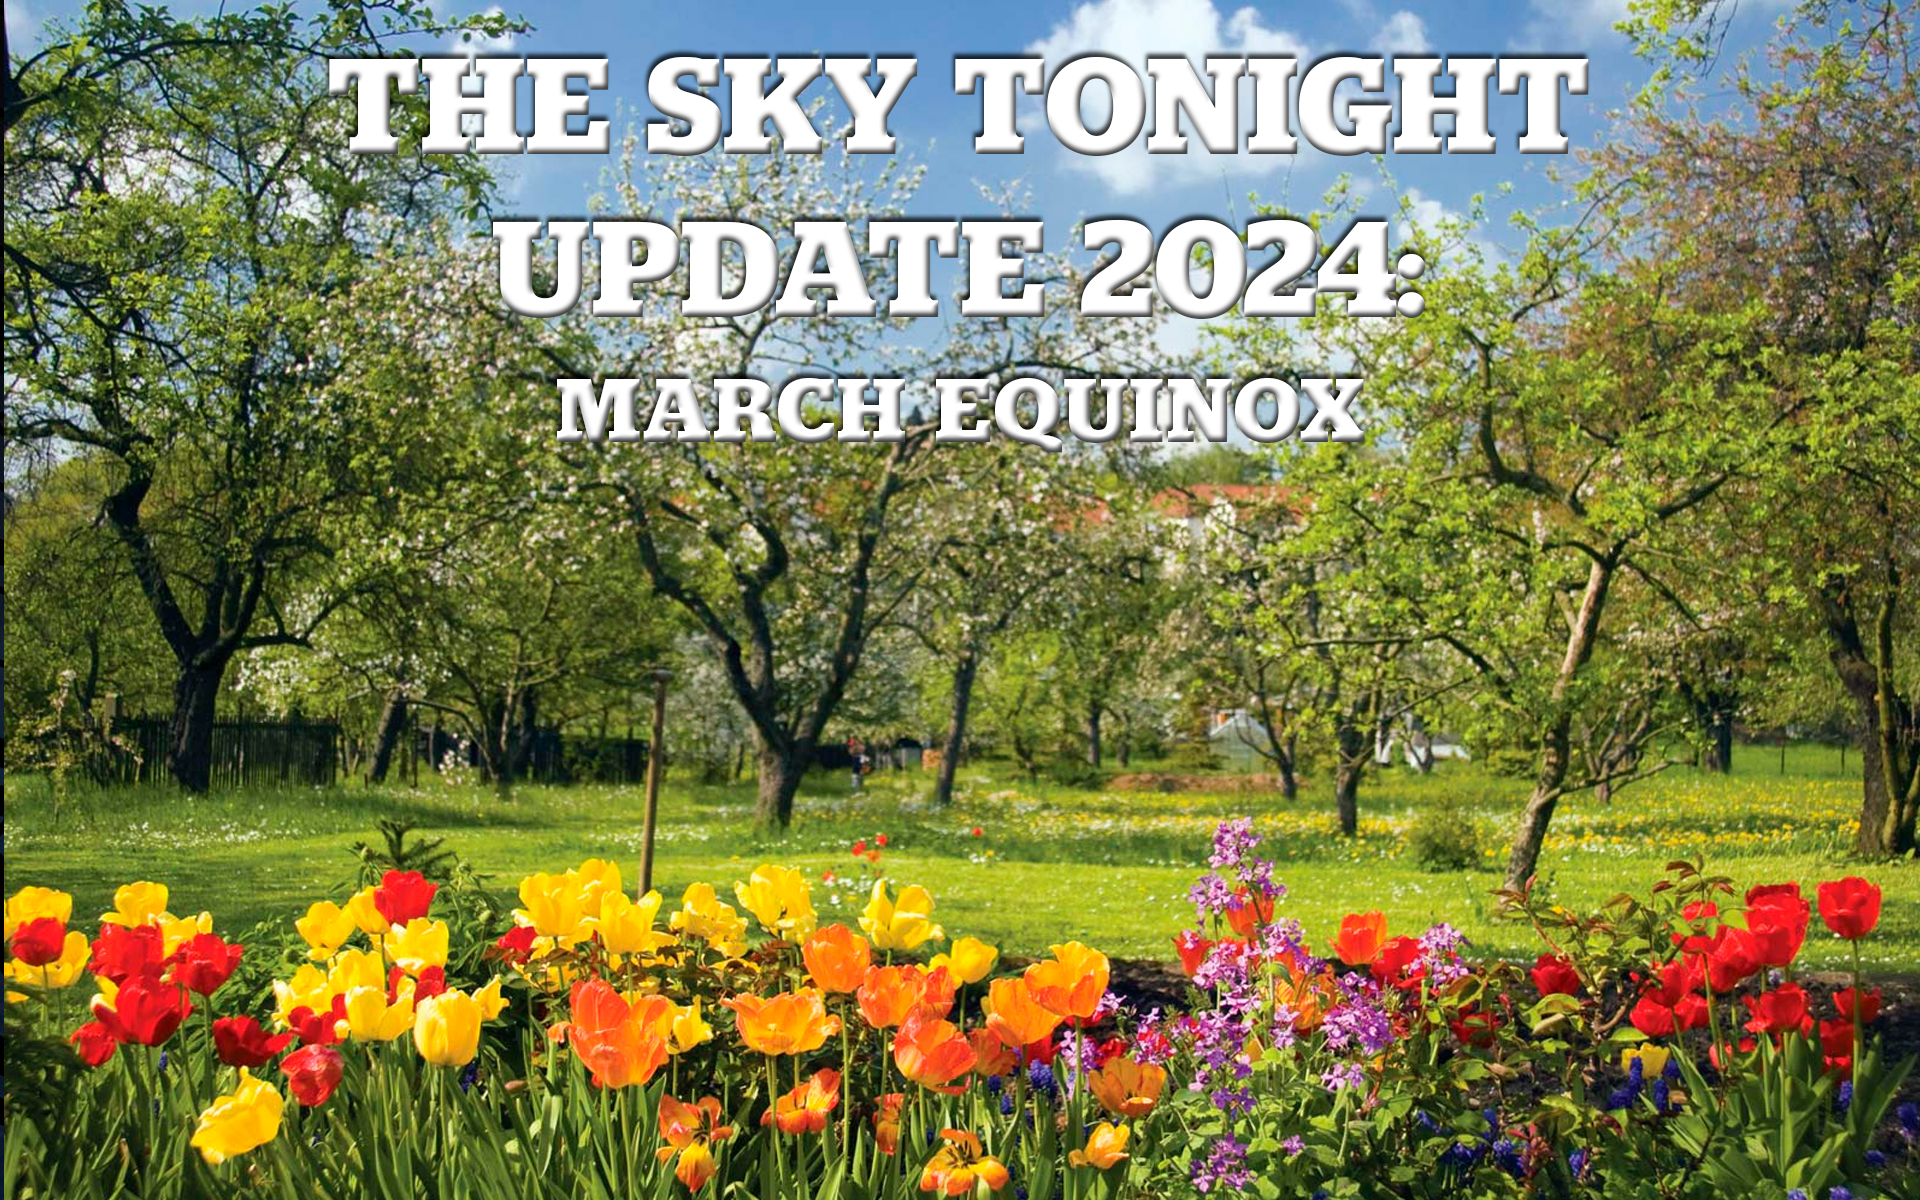 The Sky Tonight Update: March Equinox